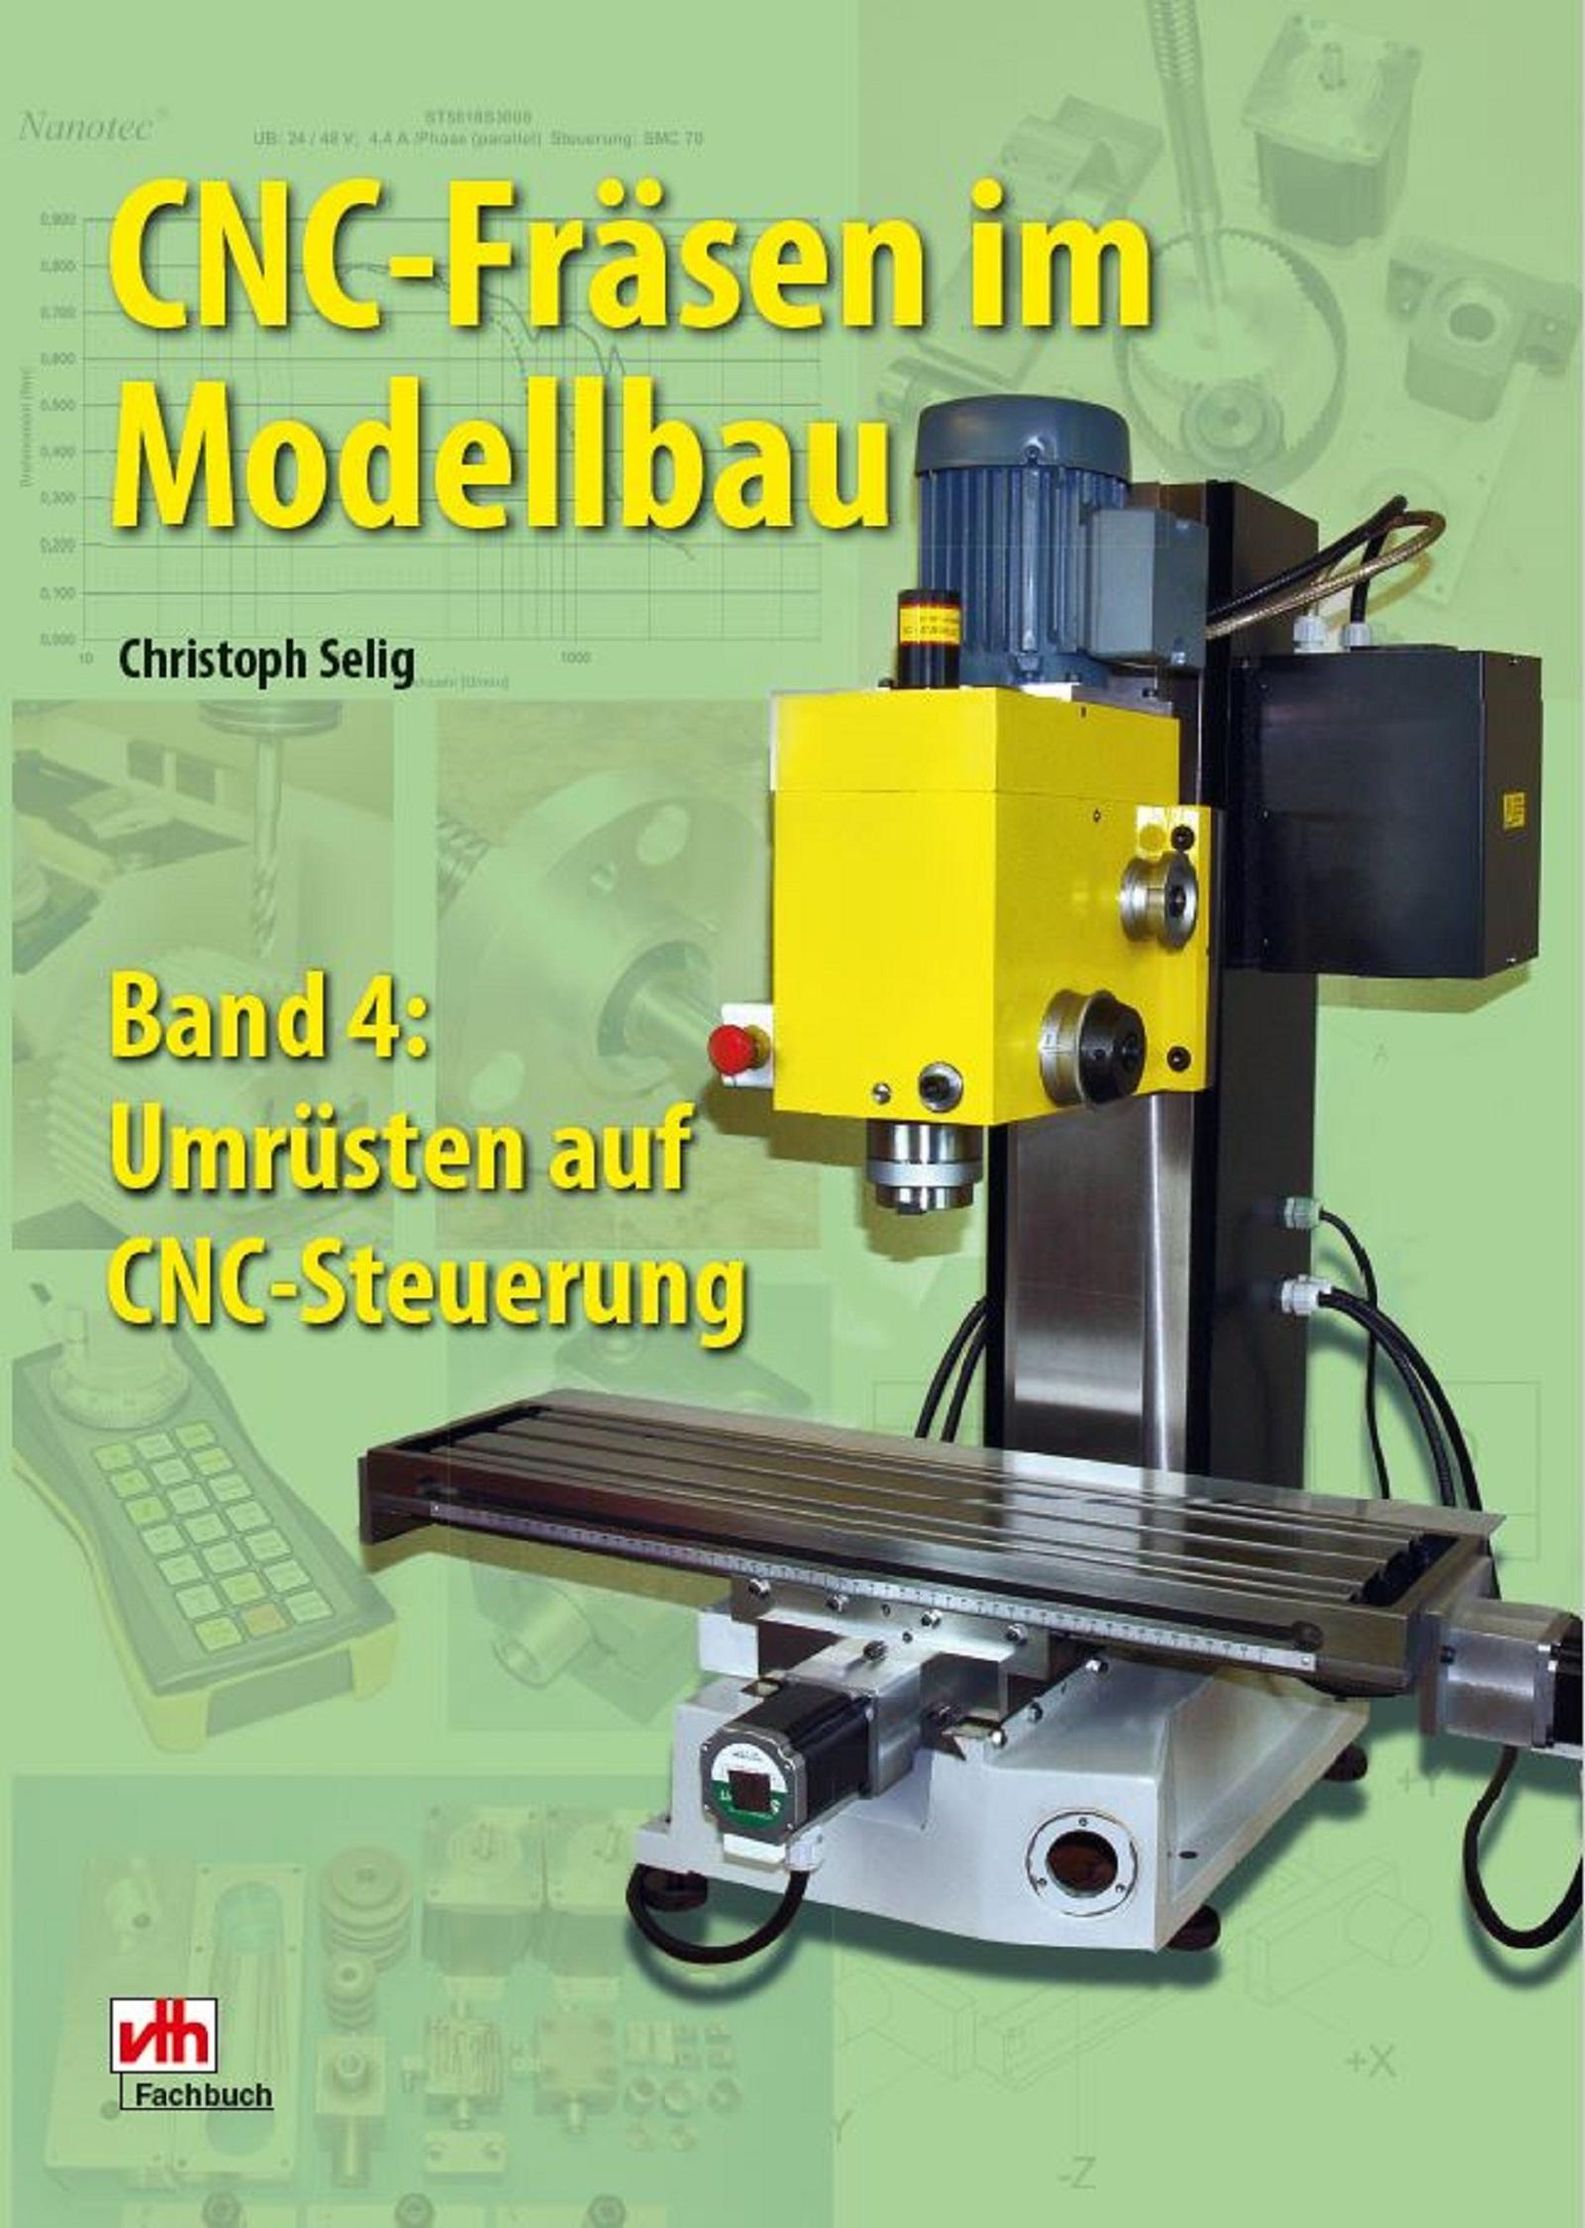 CNC-Fräsen im Modellbau - Band 4 eBook v. Christoph Selig | Weltbild